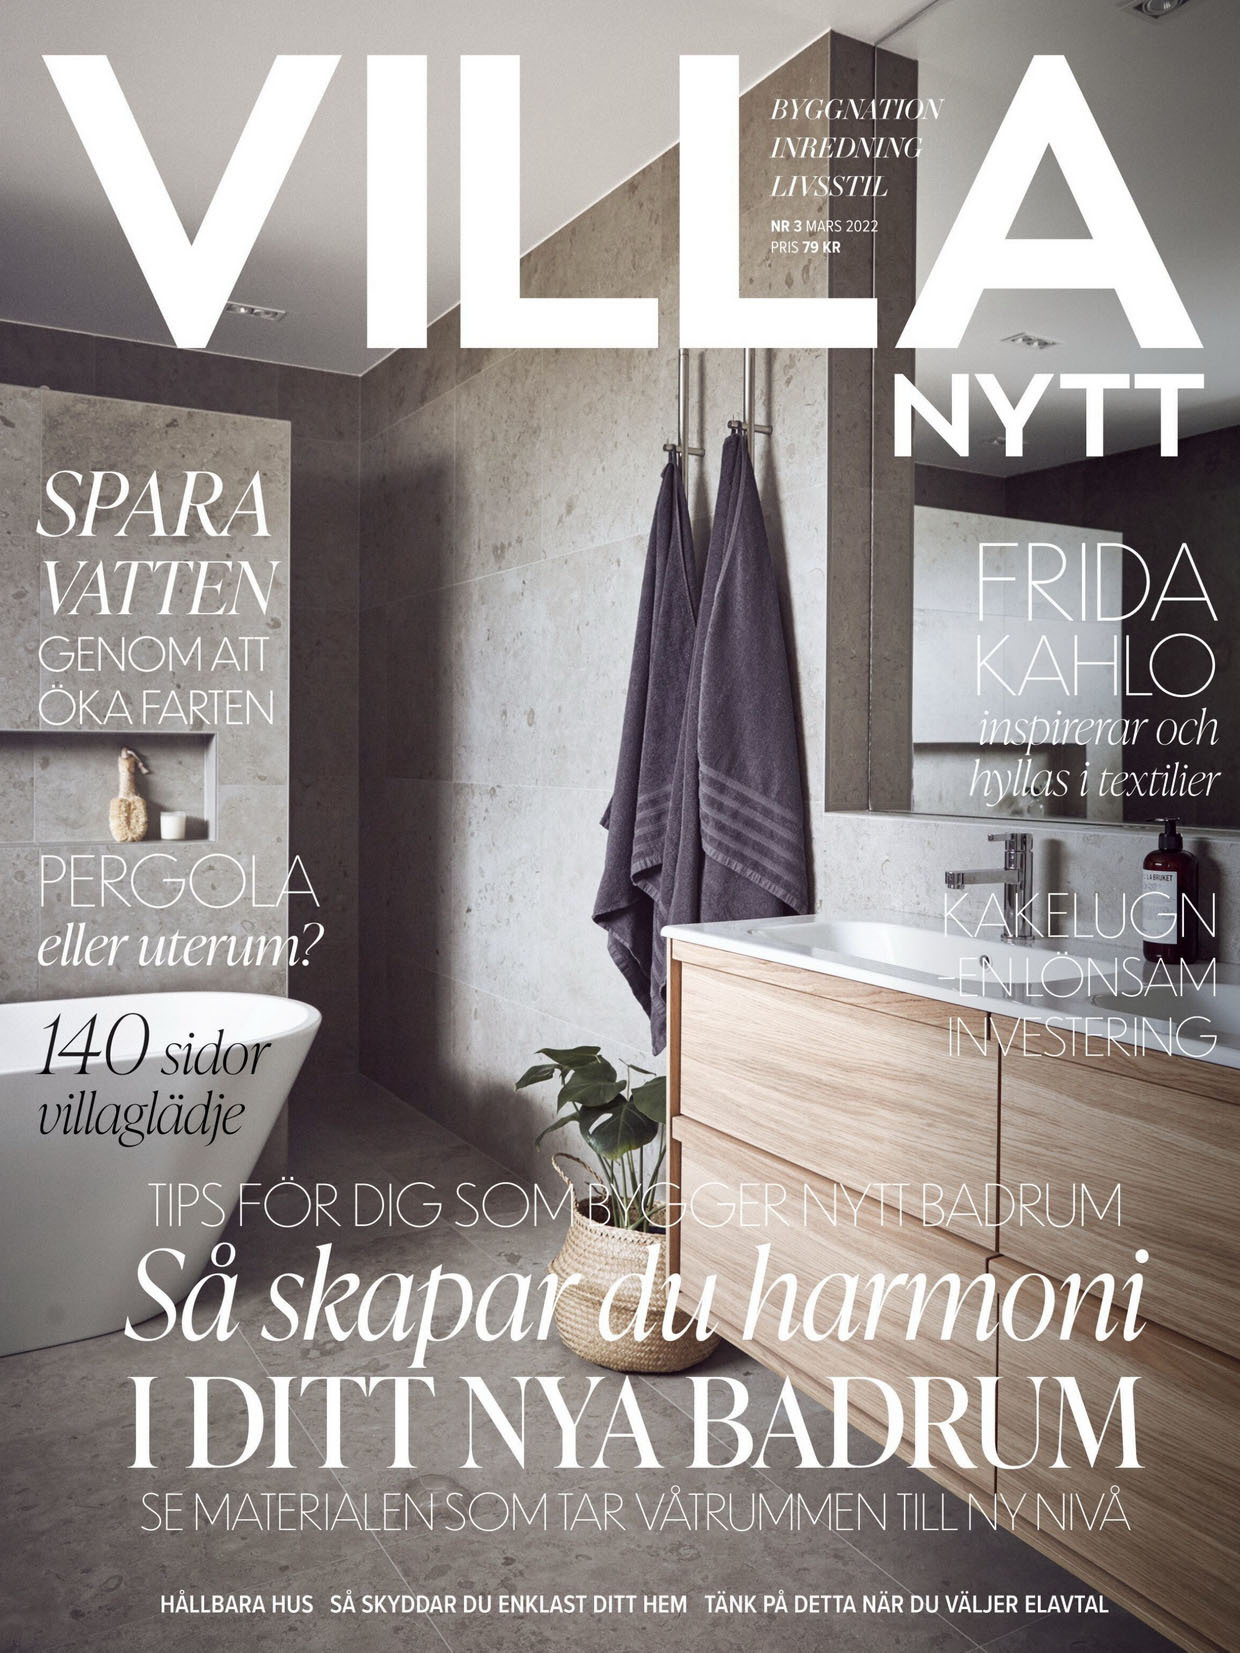 《Villanytt》瑞典室内设计趋势杂志2022年03月号